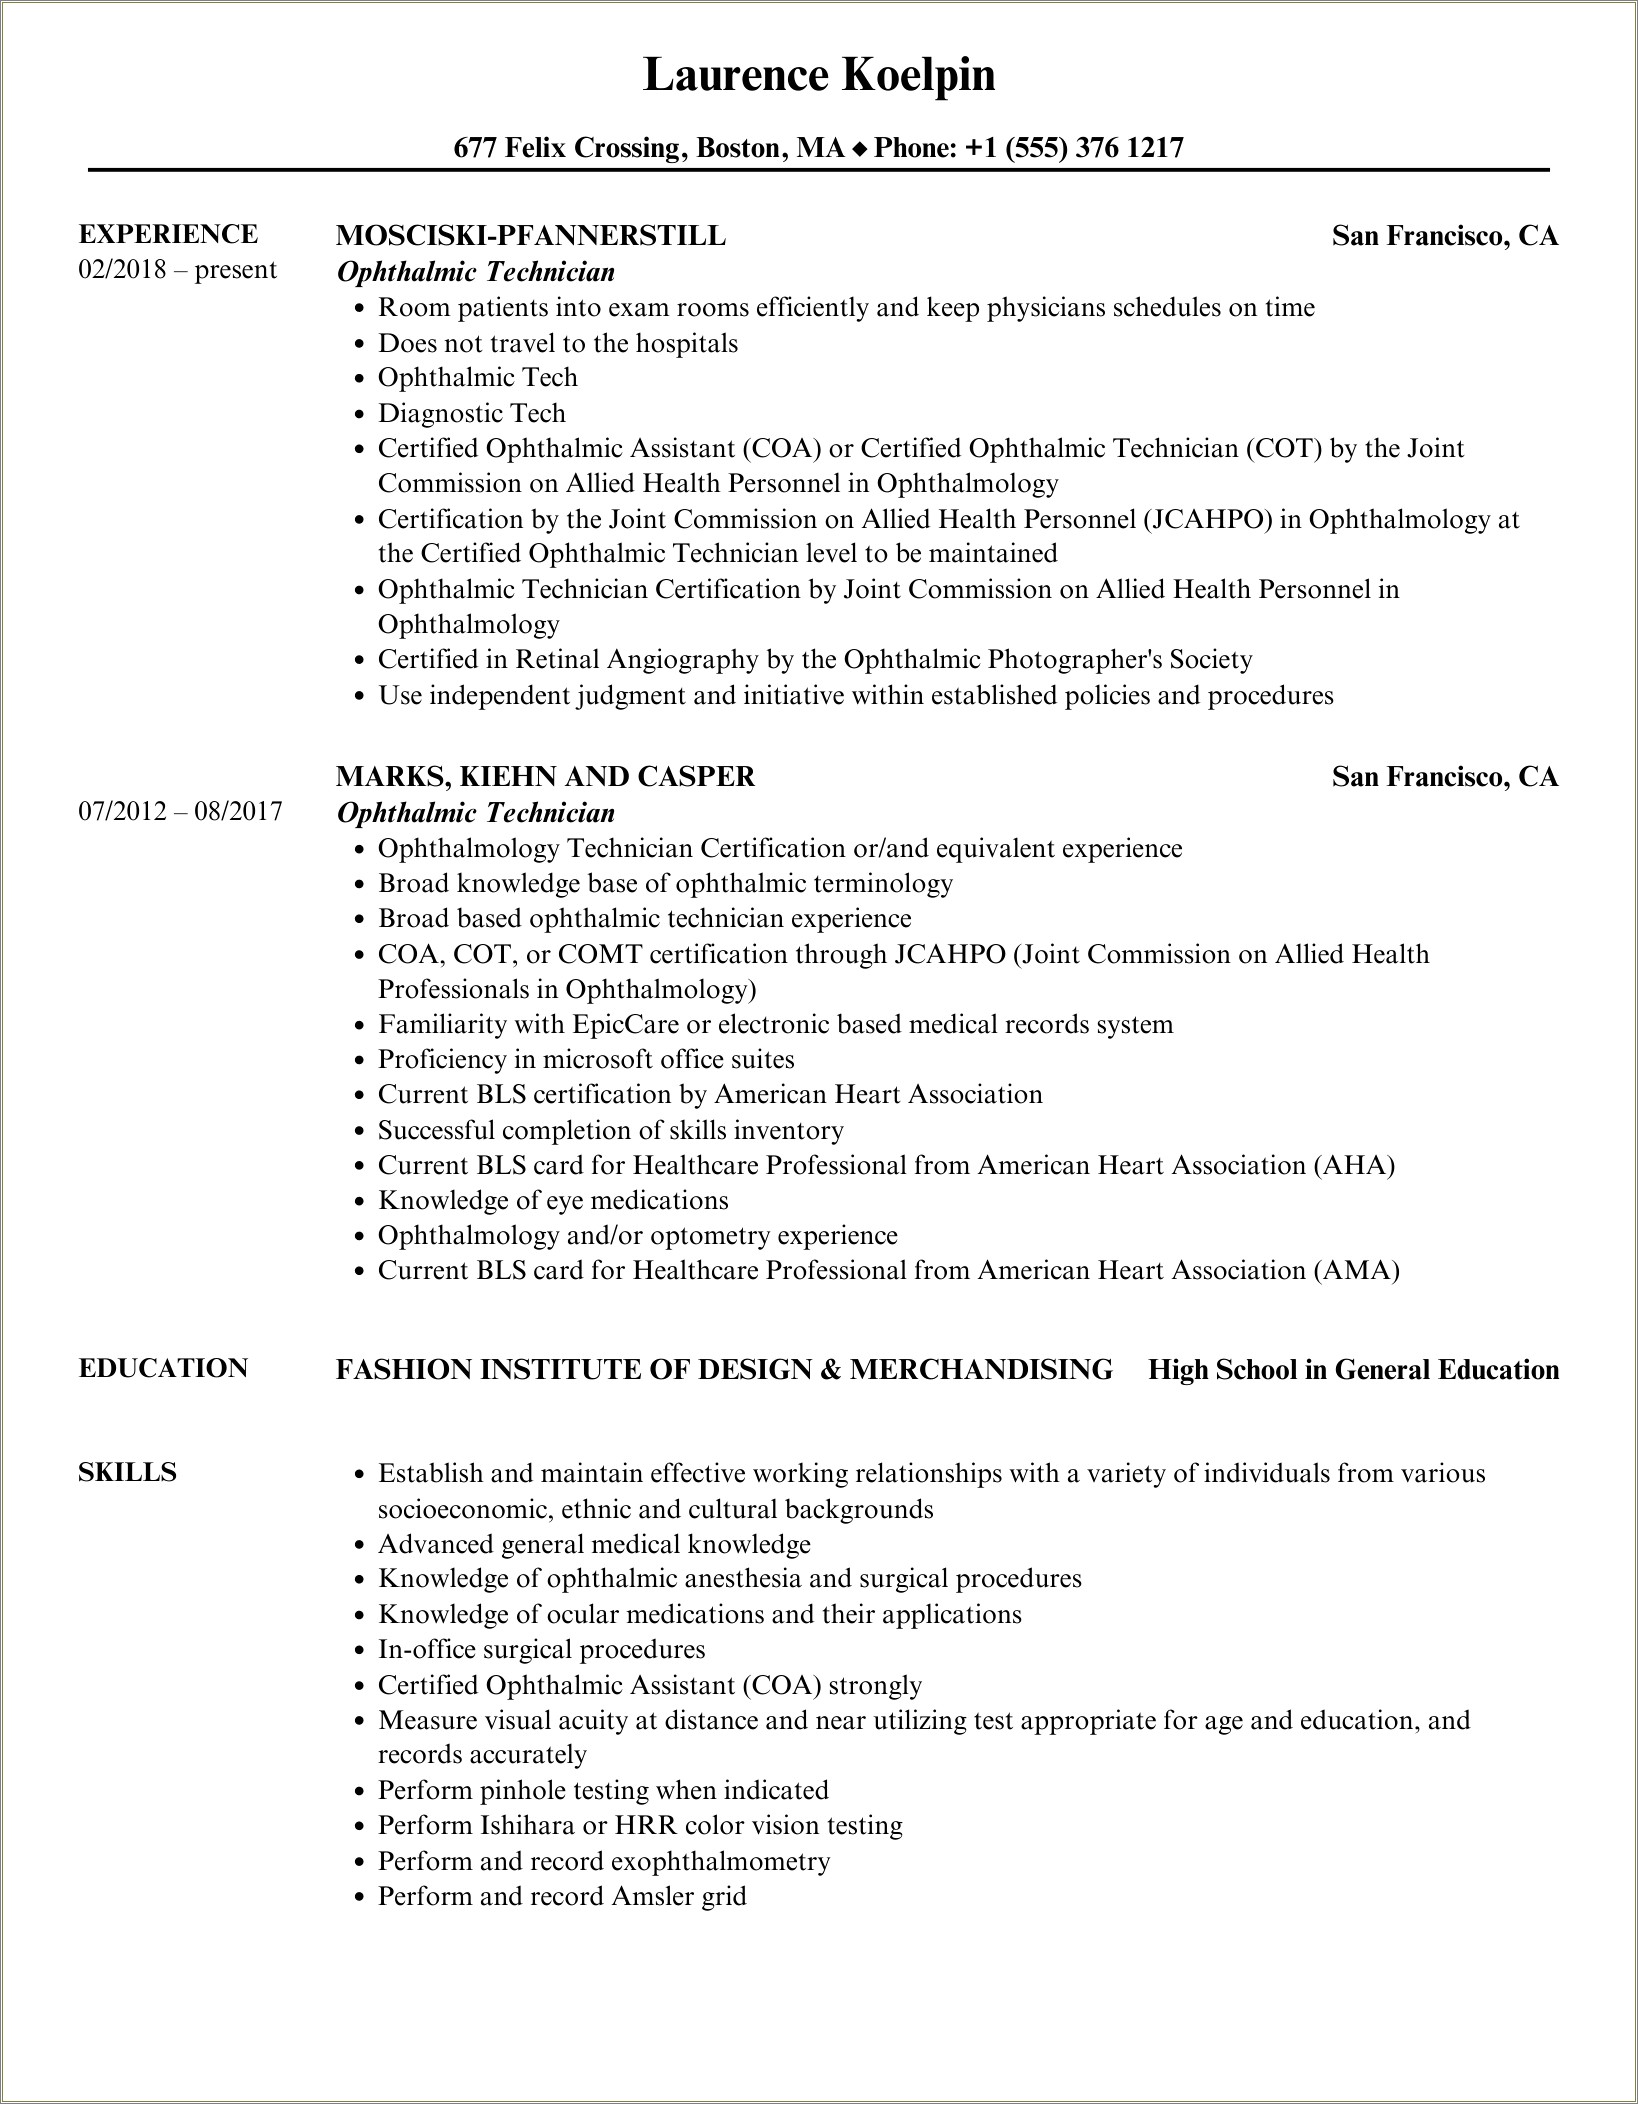 Job Description For Optometric Technician For Resume